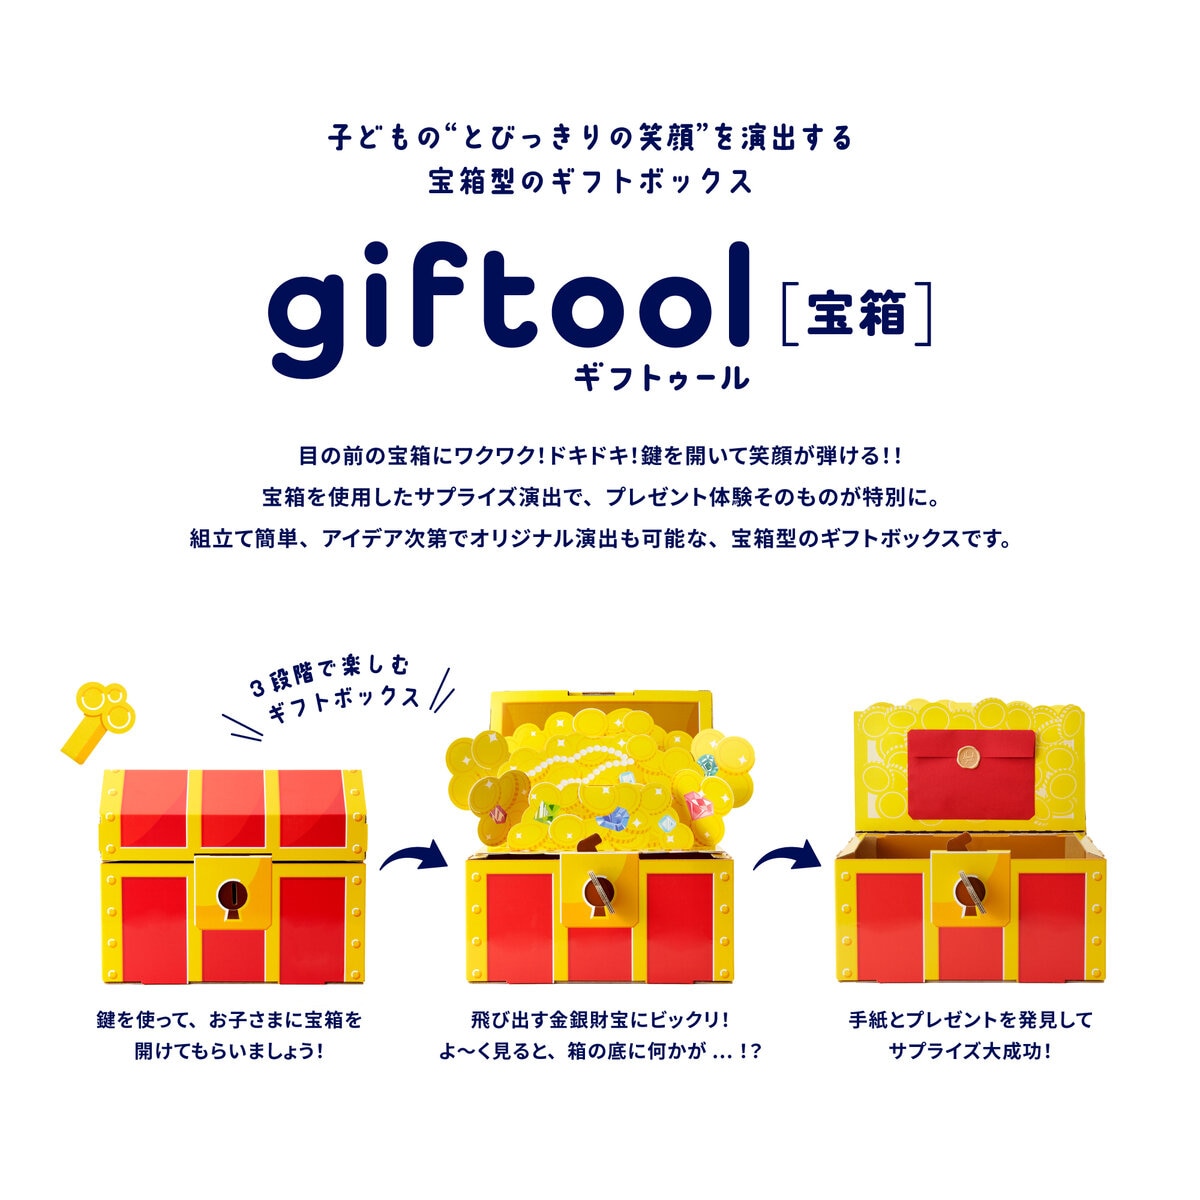 giftool 宝箱 金銀財宝 Sサイズ x 5